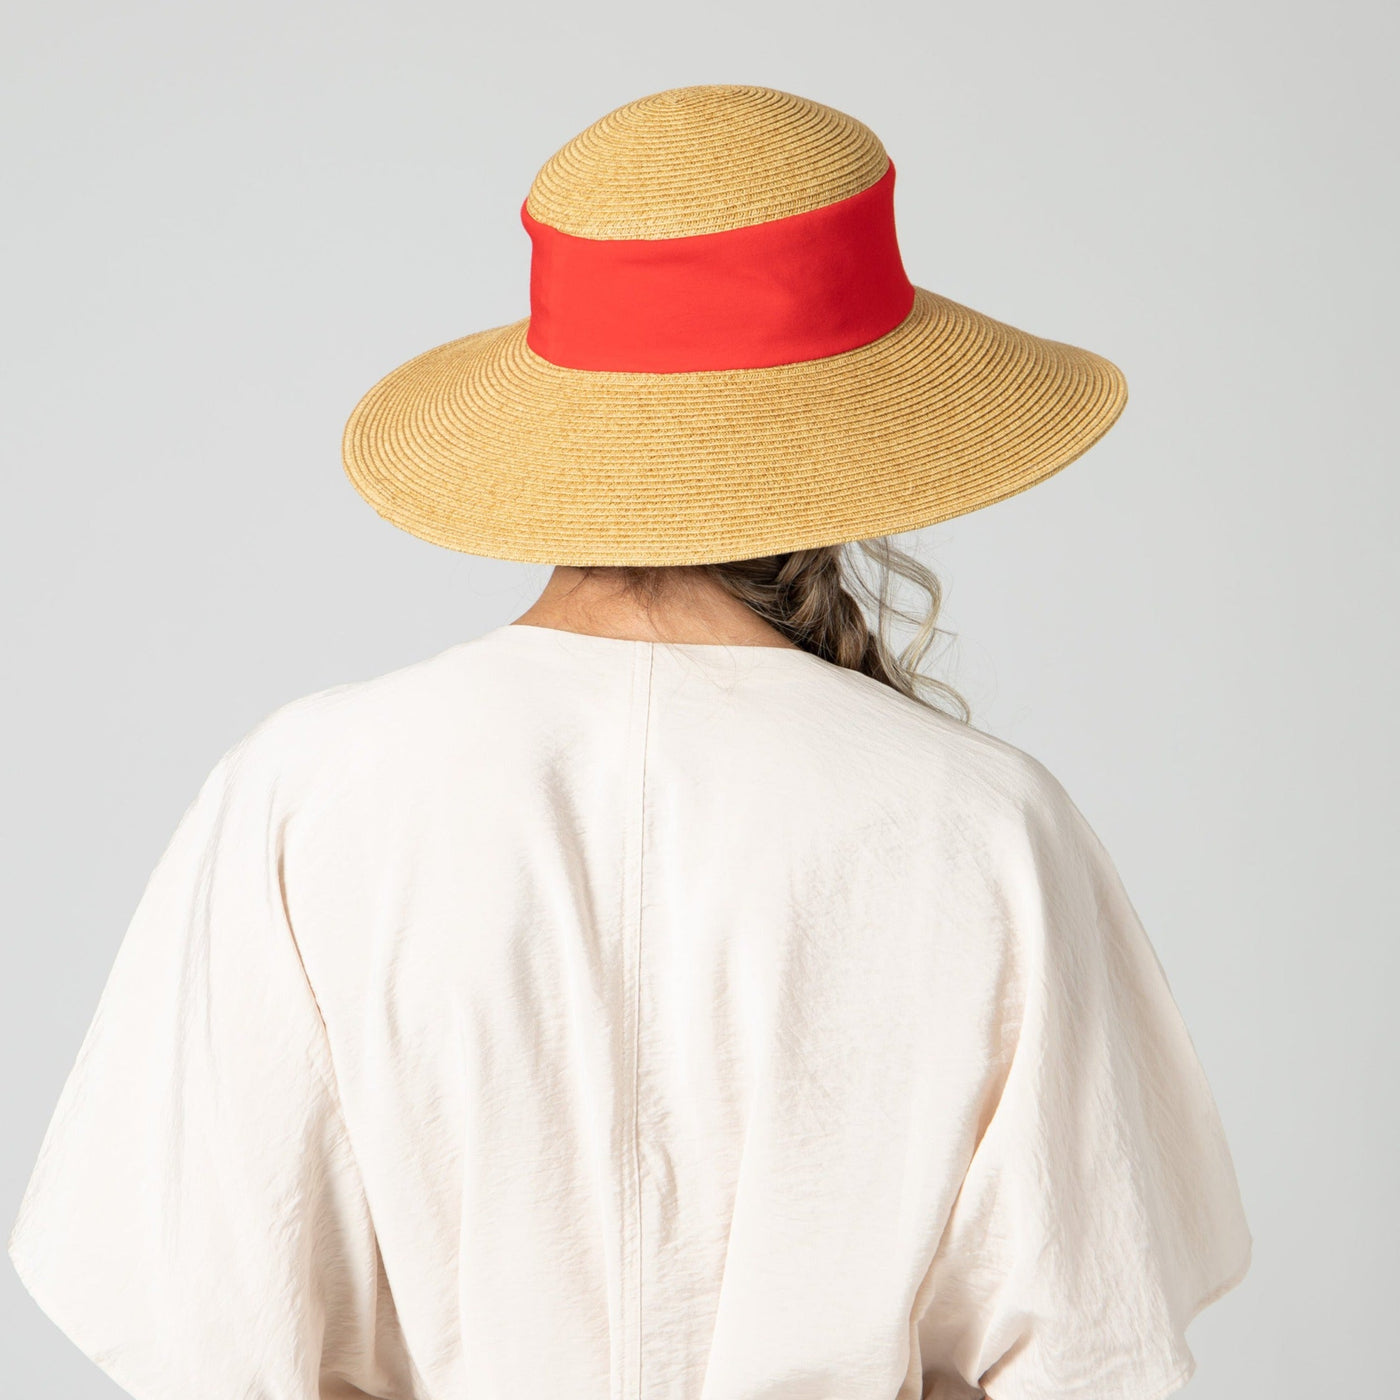 SUN BRIM - Women's Collapsible Crown Sun Hat